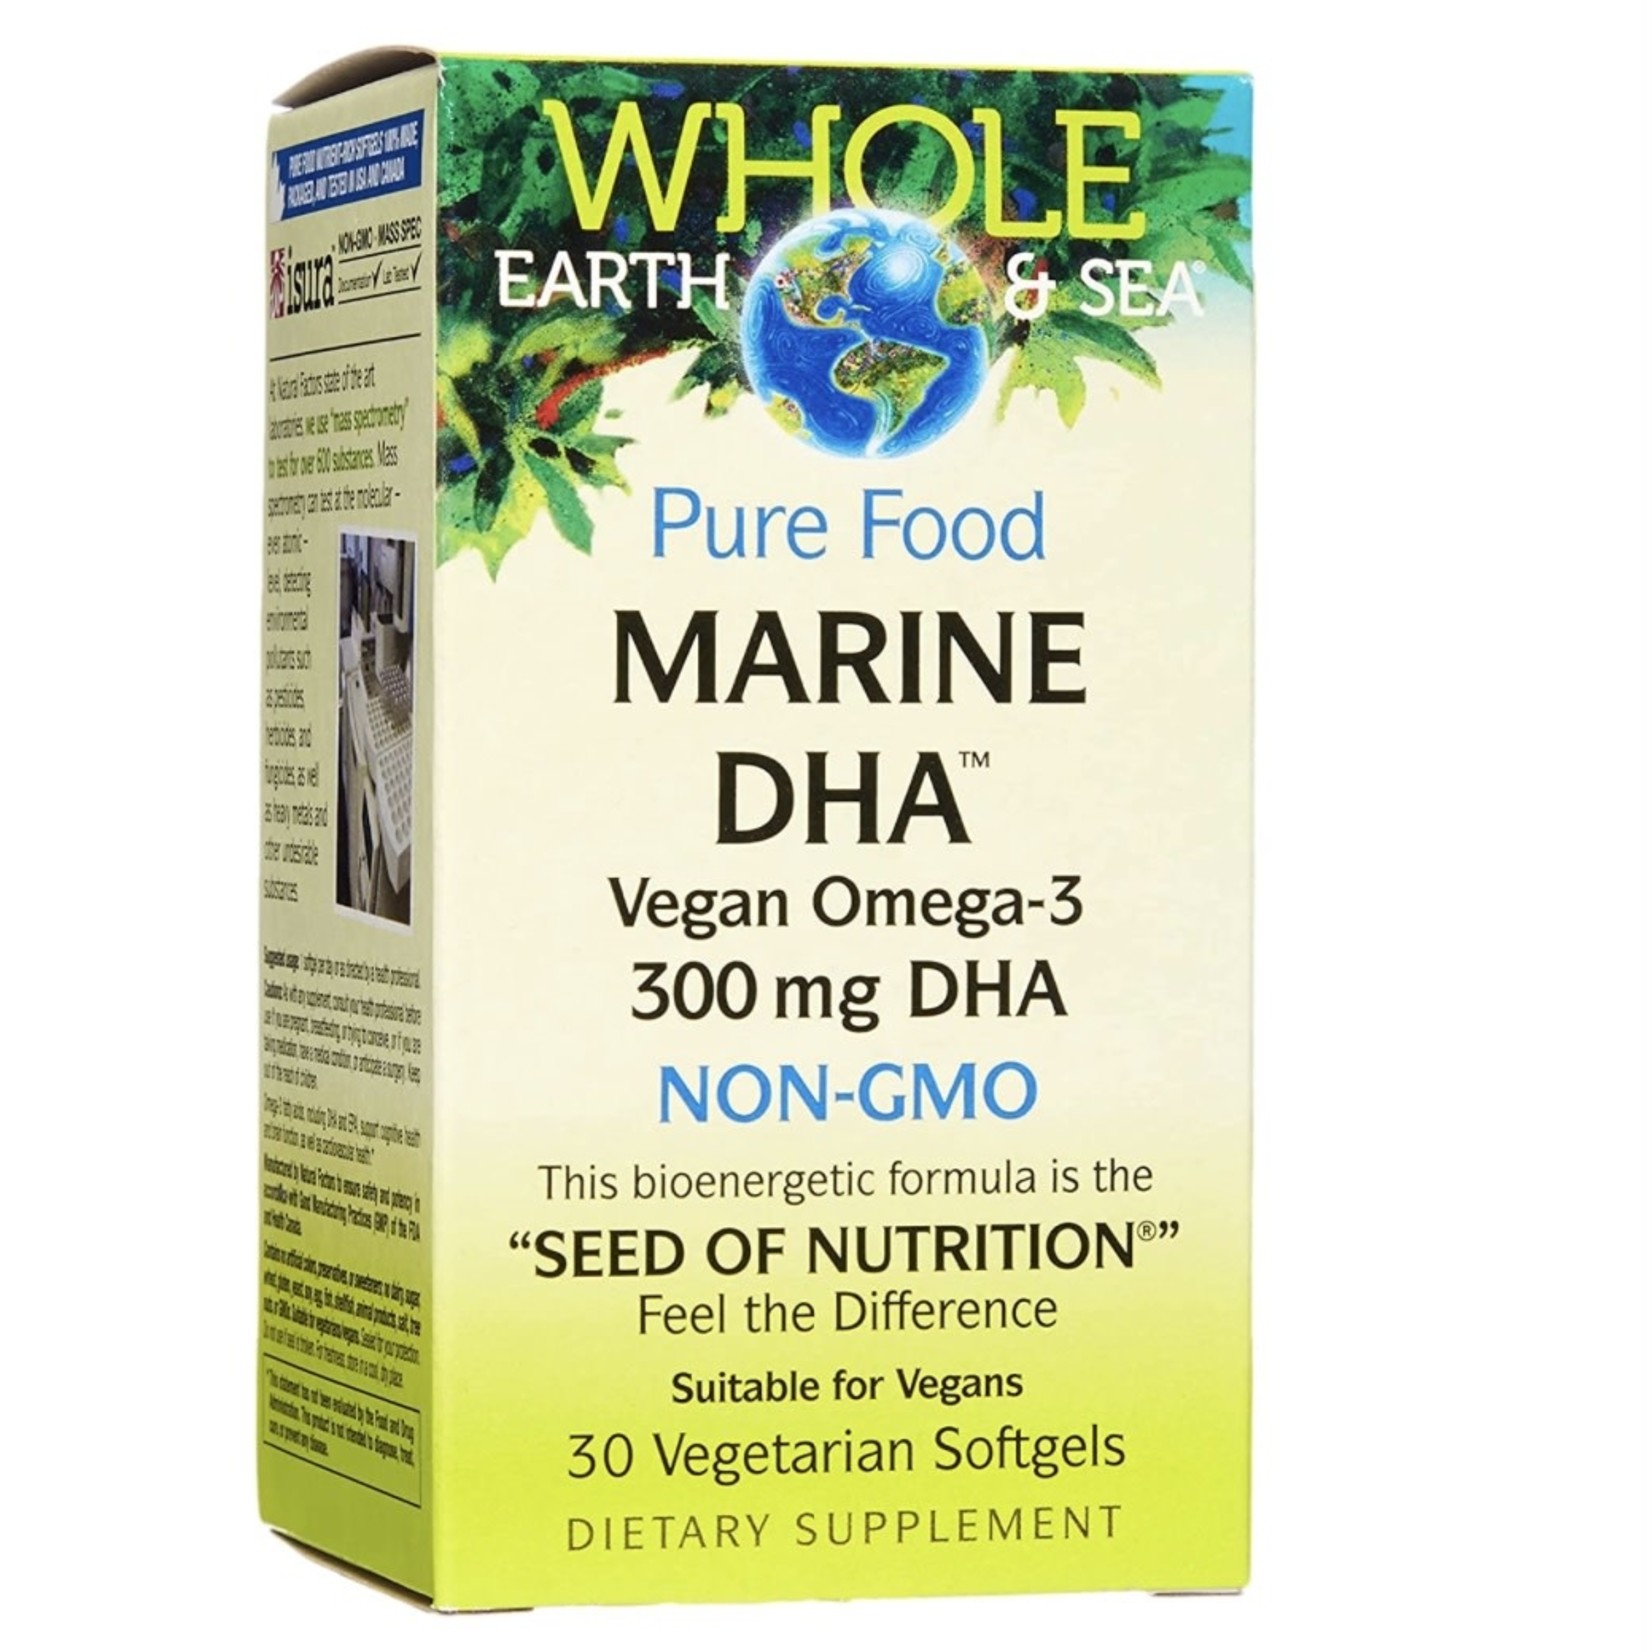 Whole Earth & Sea Whole Earth & Sea Marine DHA 30 softgels